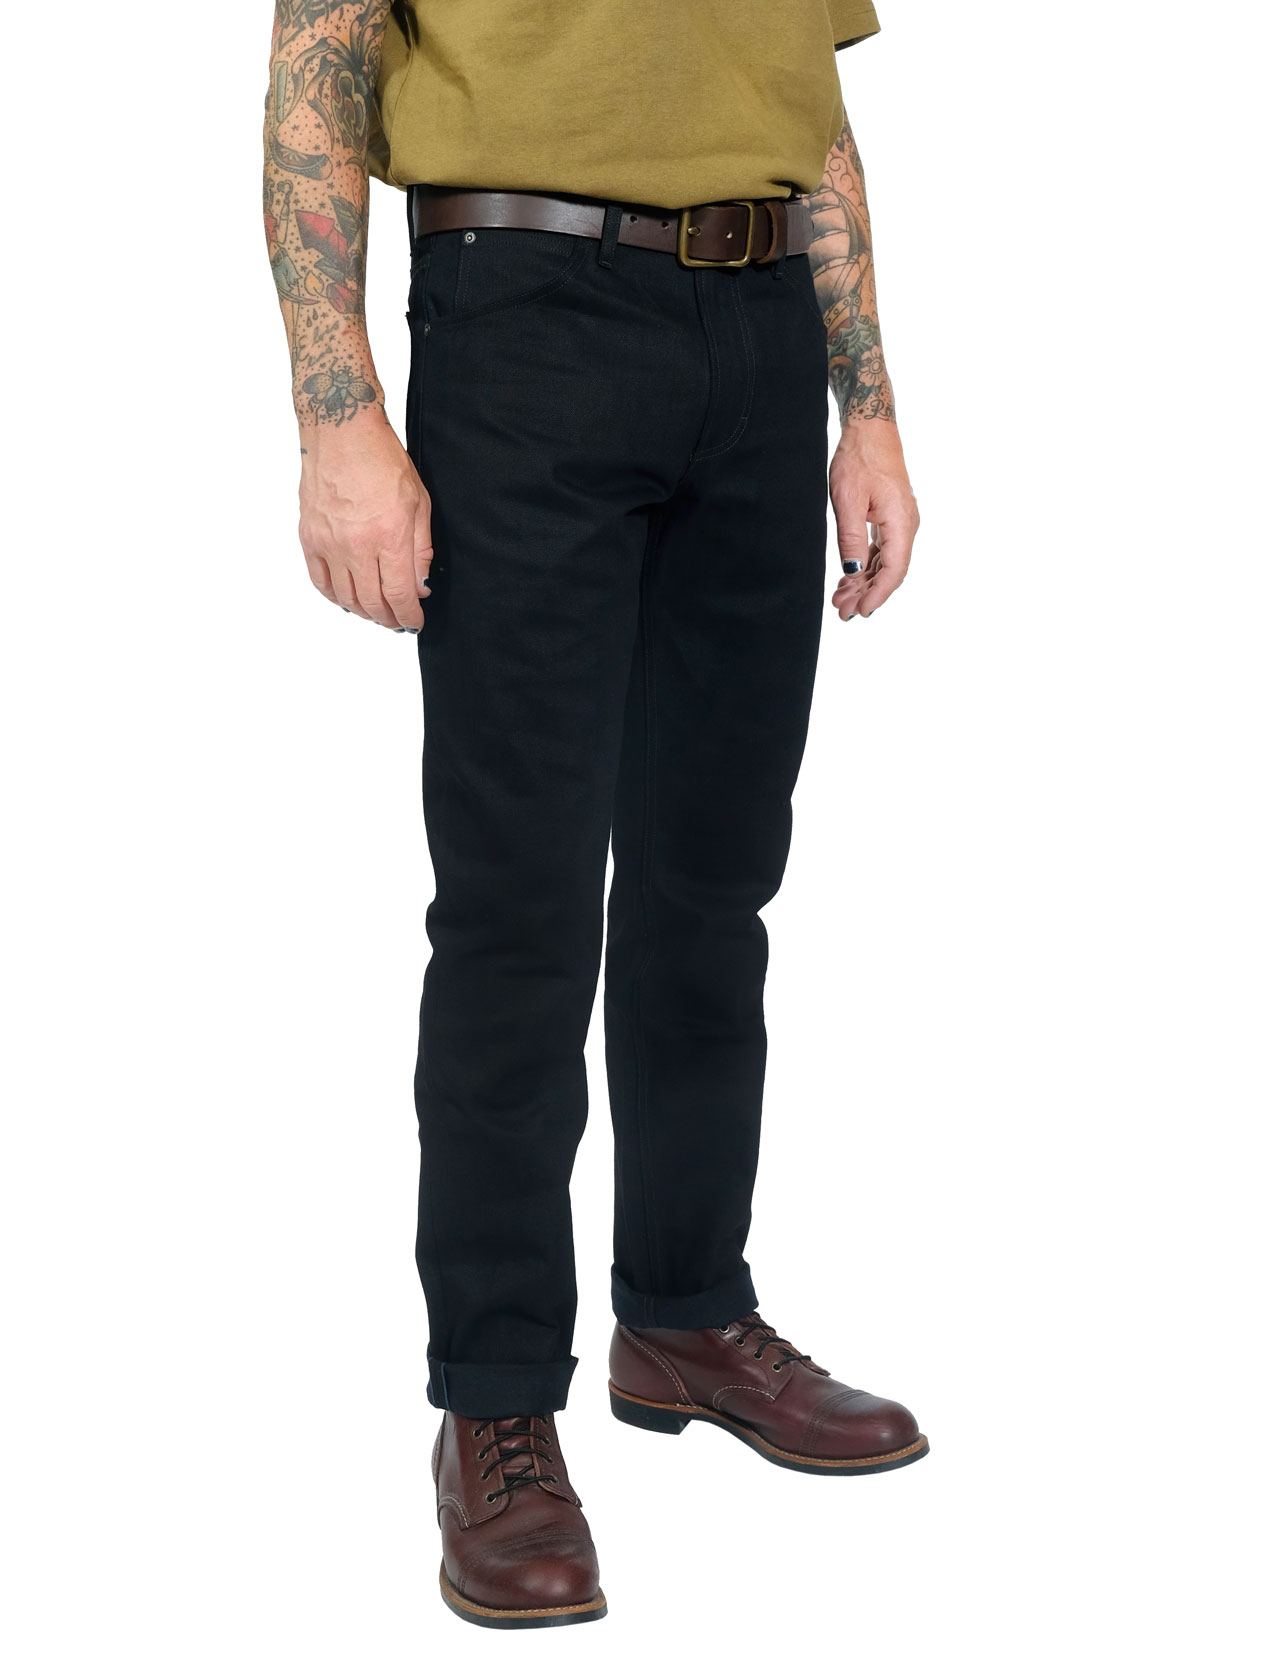 Lee - 101 Z Jeans Dry Black Rigid Selvage Denim - Black 13oz 